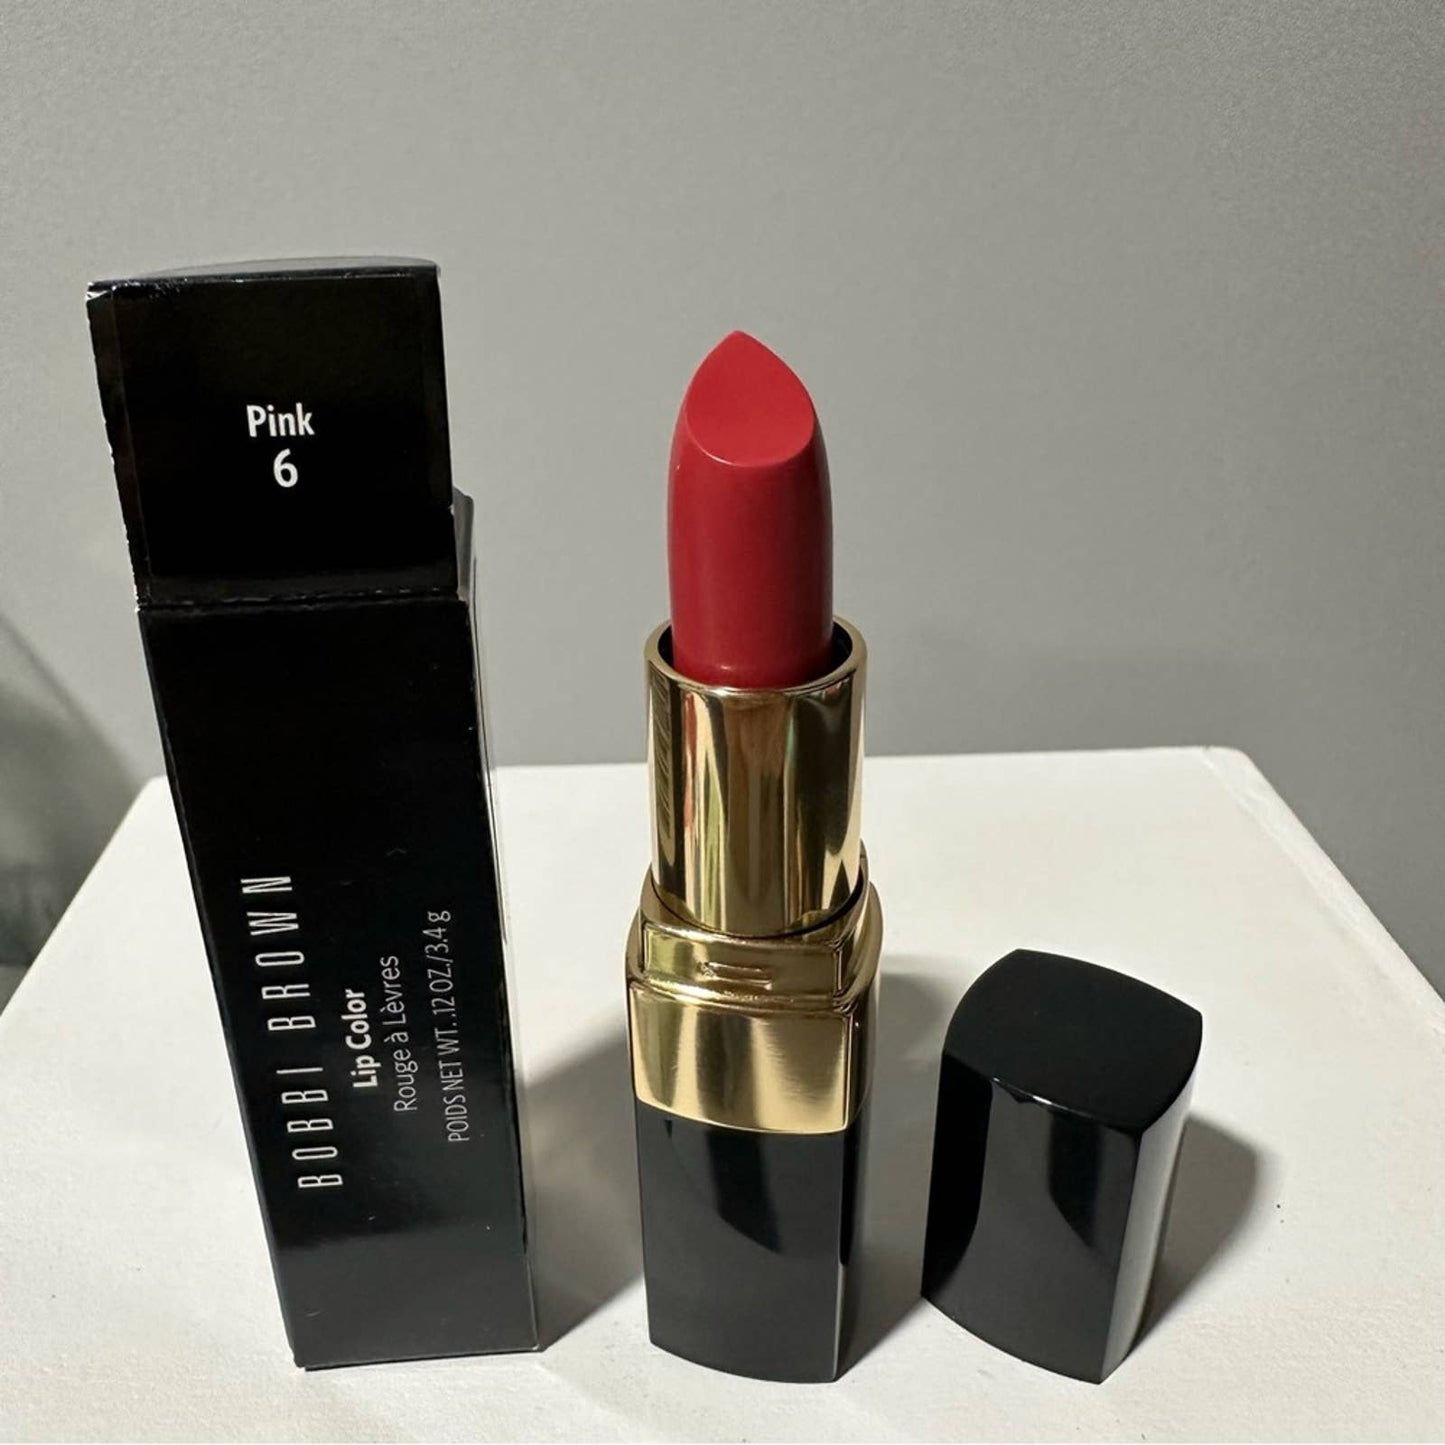 Bobbi Brown Full Size Lipstick Shade “Pink 6”